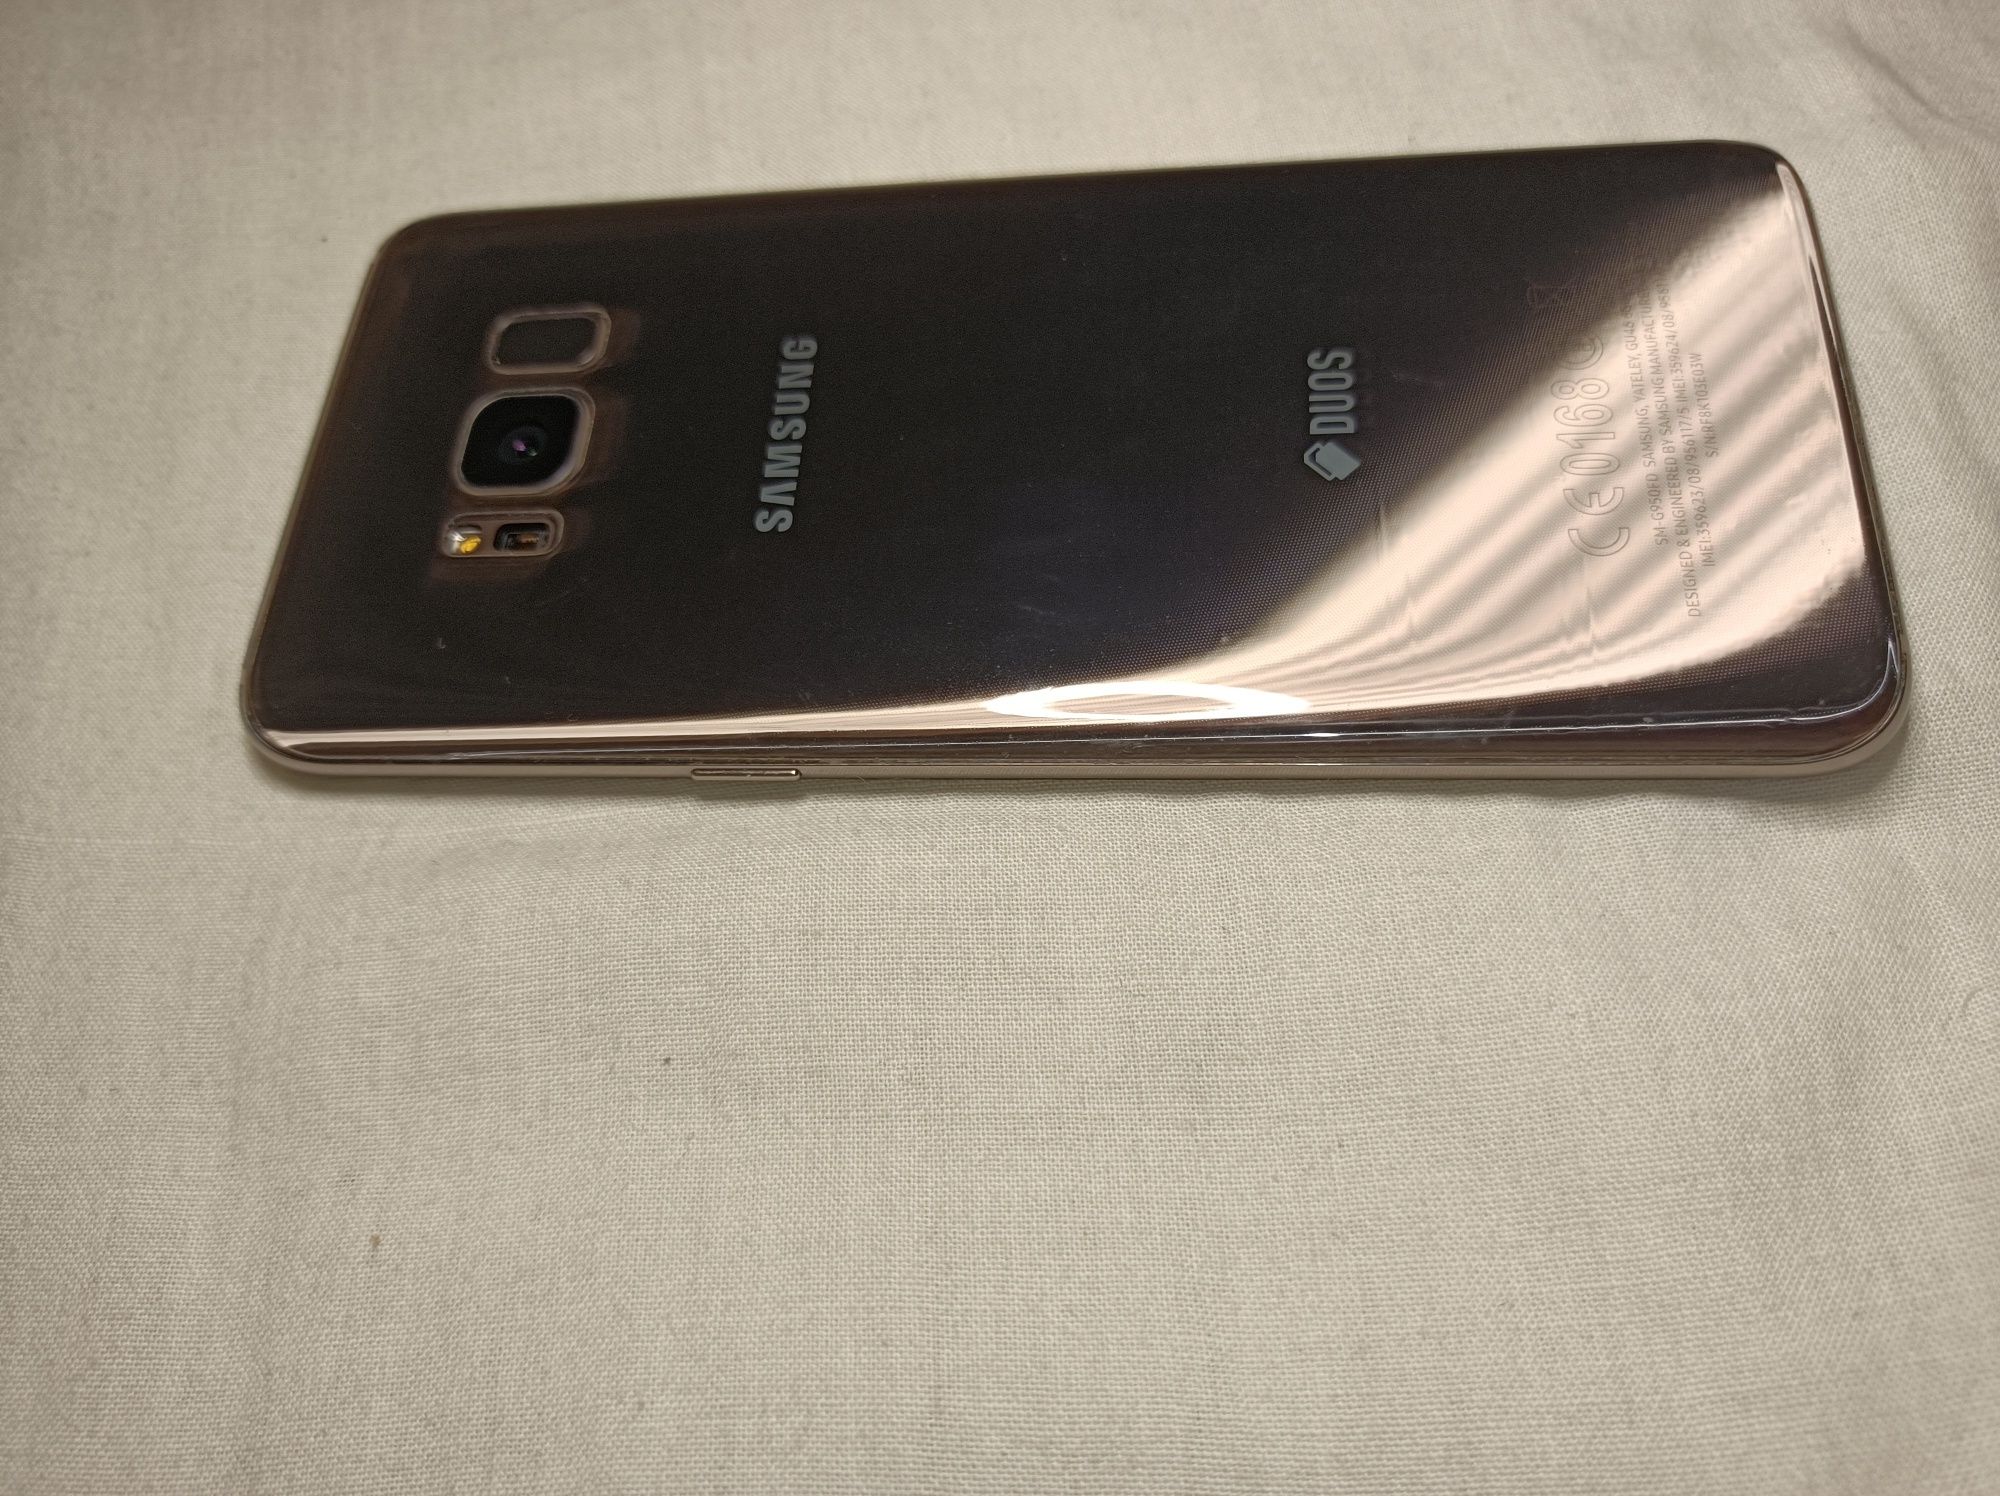 Samsung Galaxy S8 duos dual sim